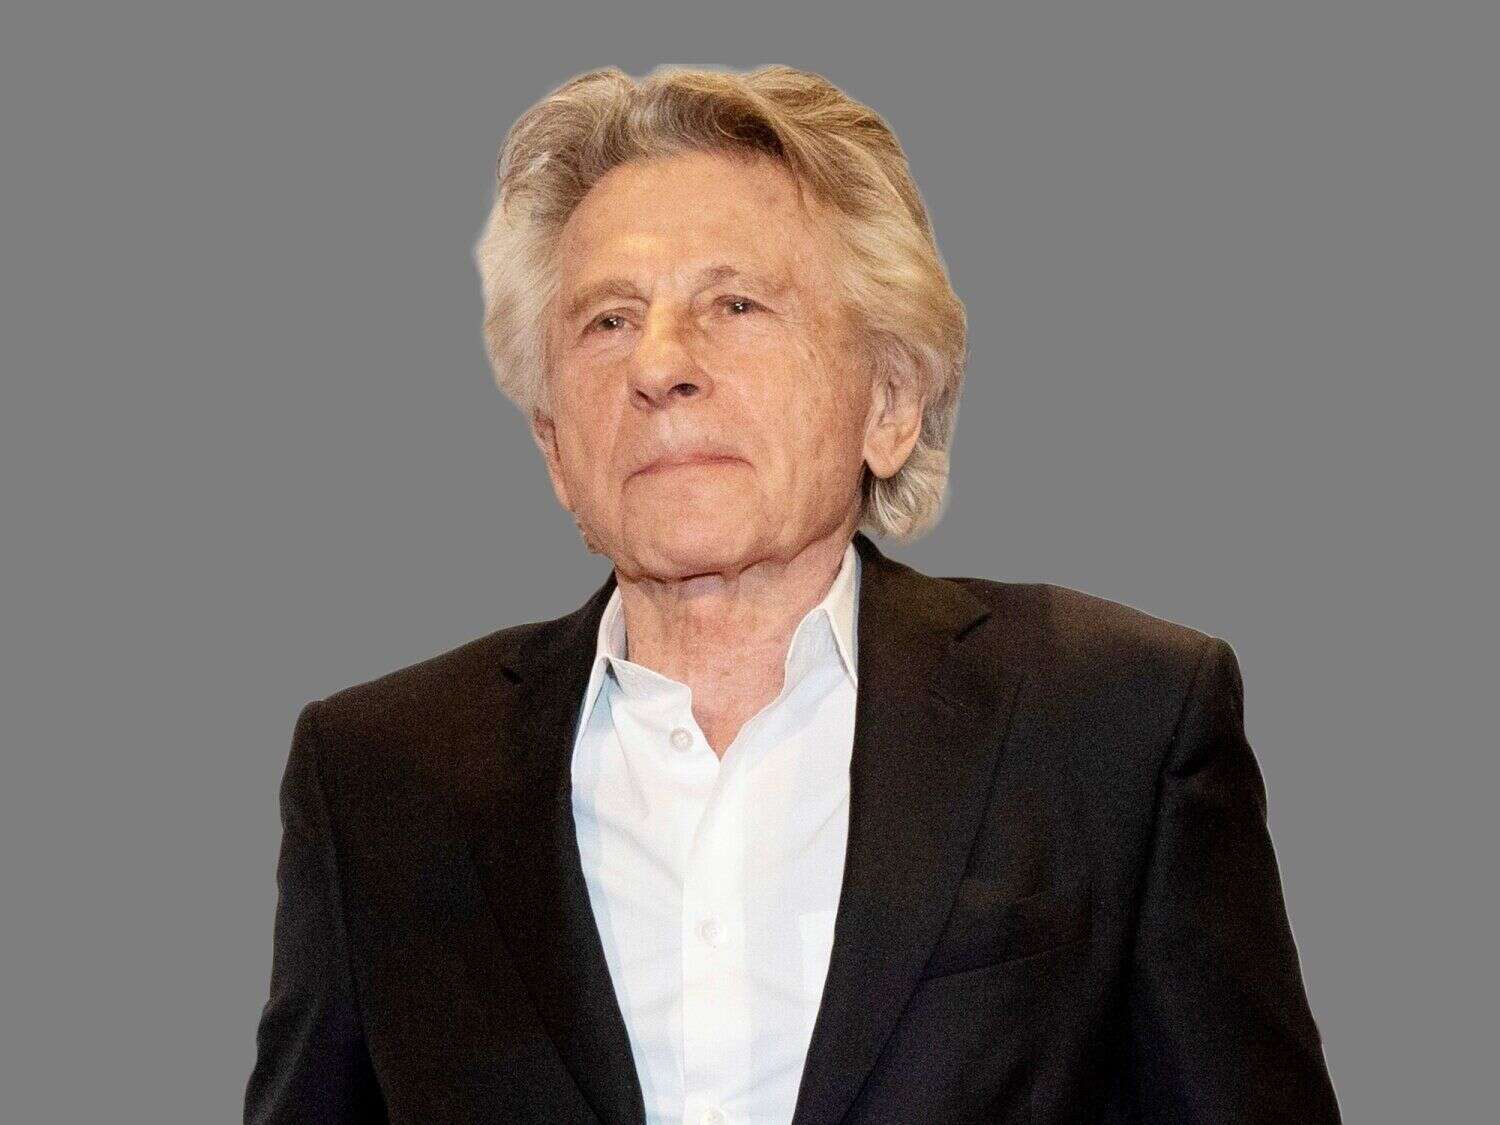 Roman Polanski headshot, director, graphic element on gray